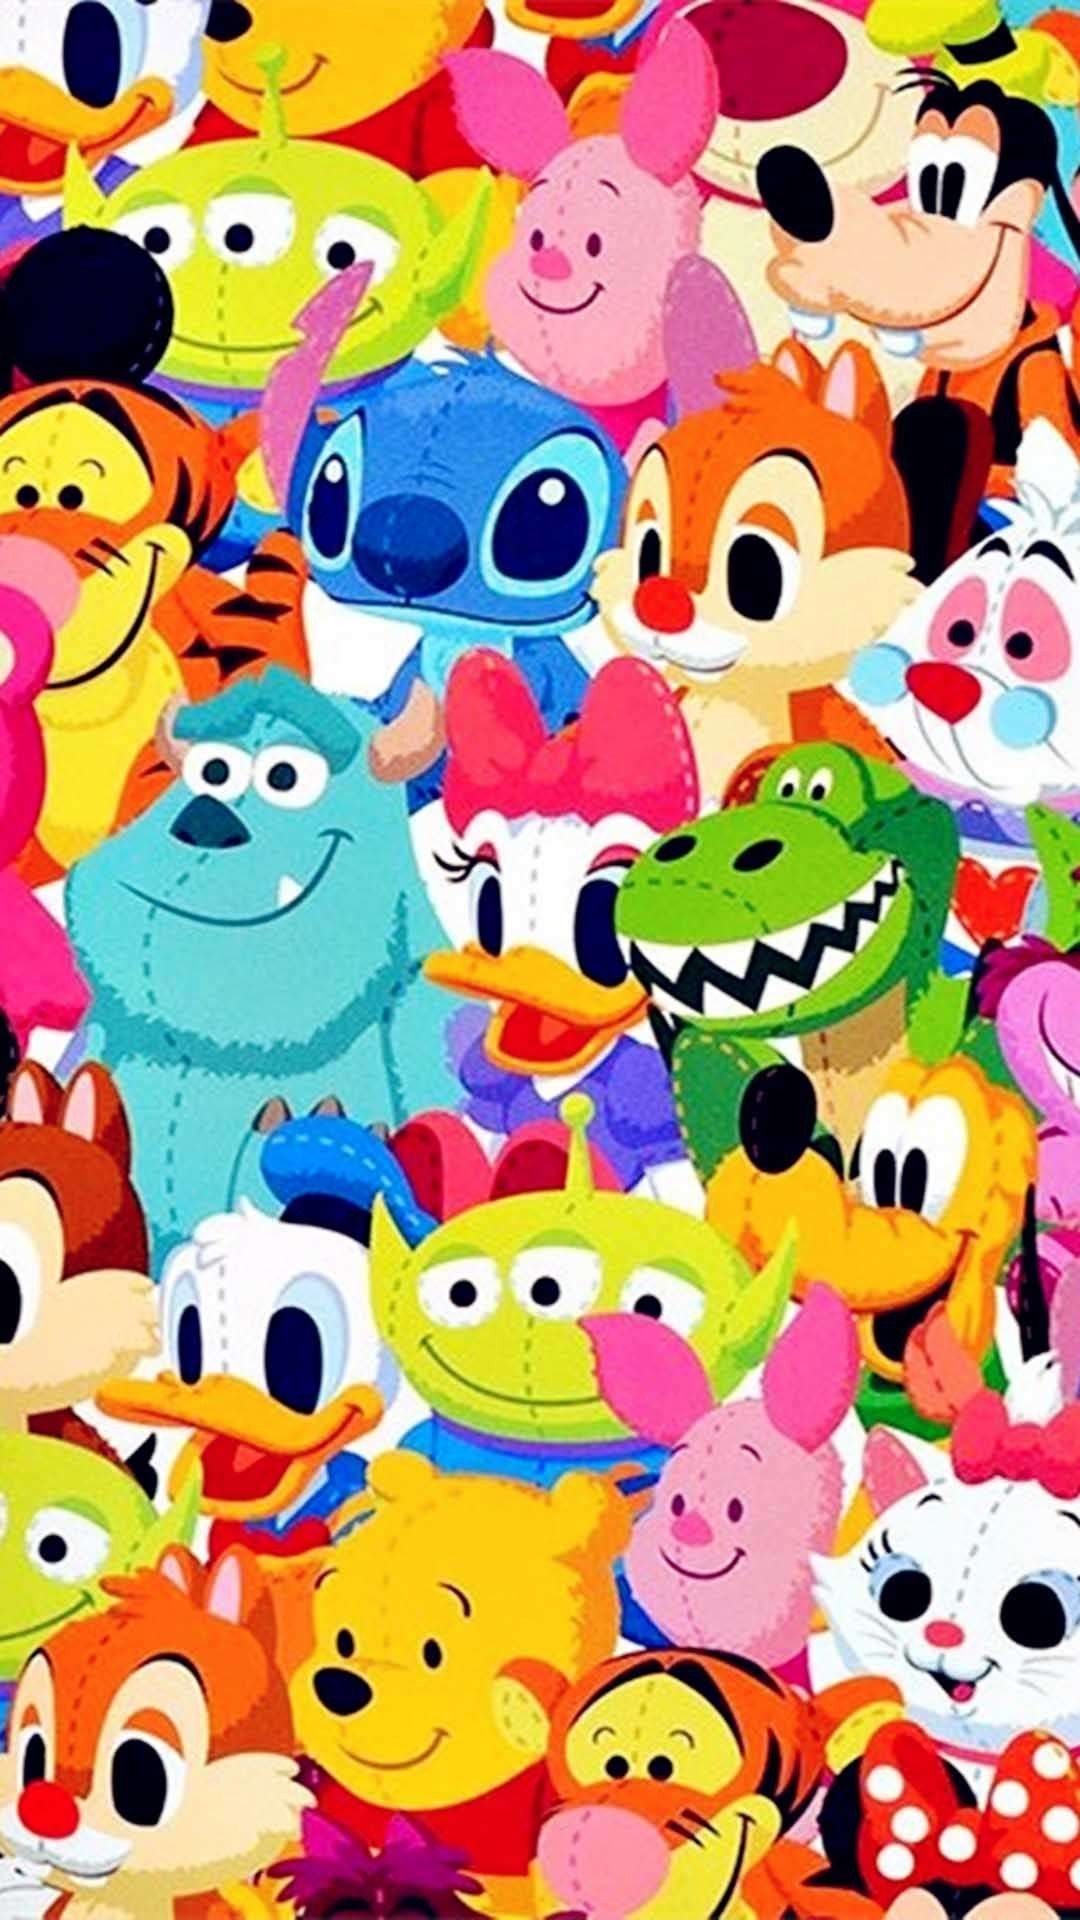 Cute Disney Characters Wallpapers - Wallpaper Cave